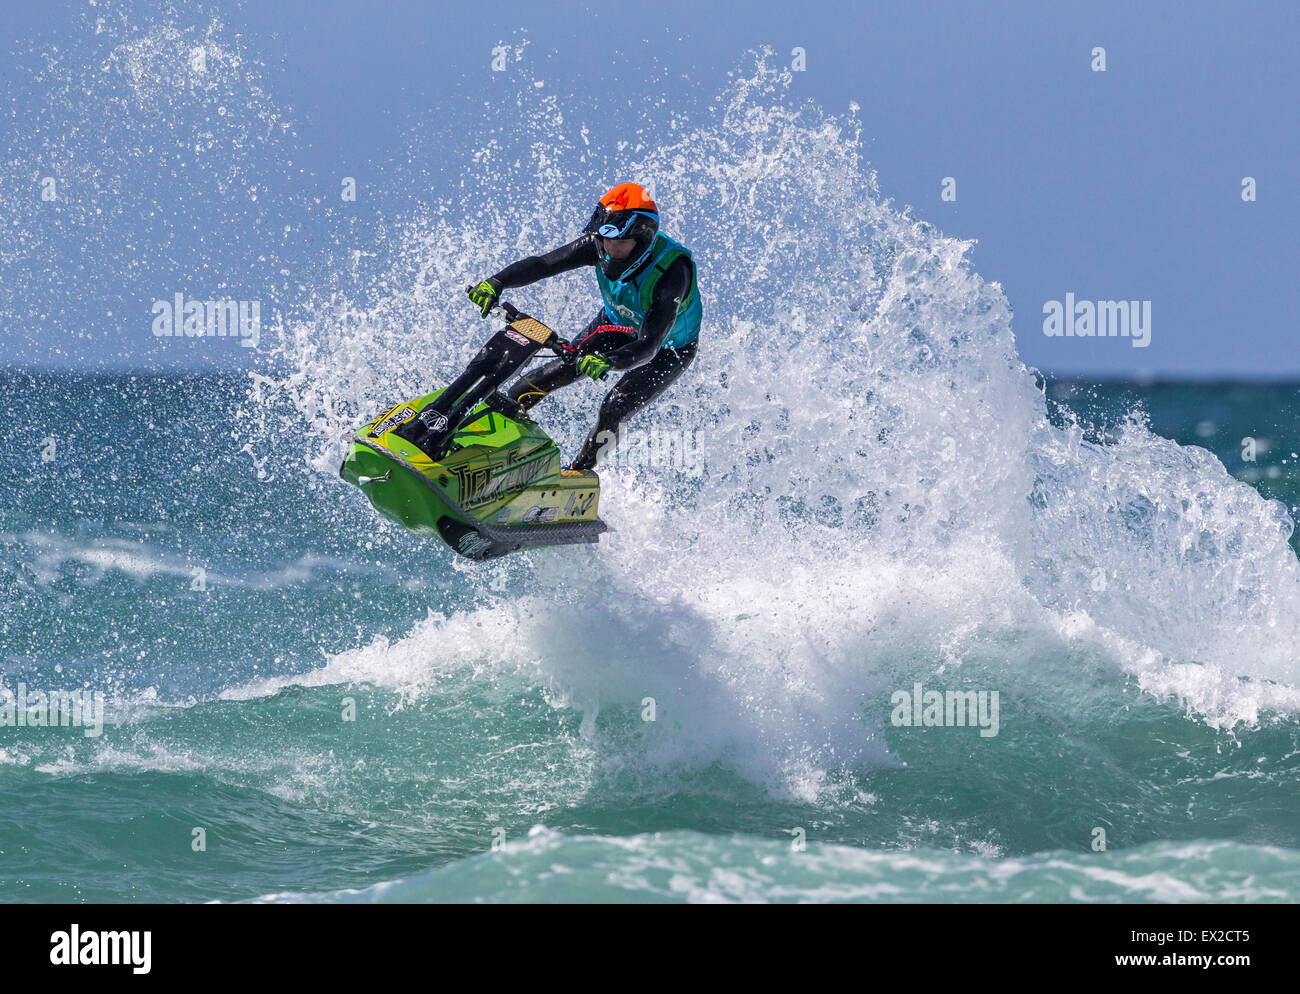 Rider competing at IFWA World Tour Jet Ski Championship 2015, Fistral beach, Cornwall, UK Stock Photo